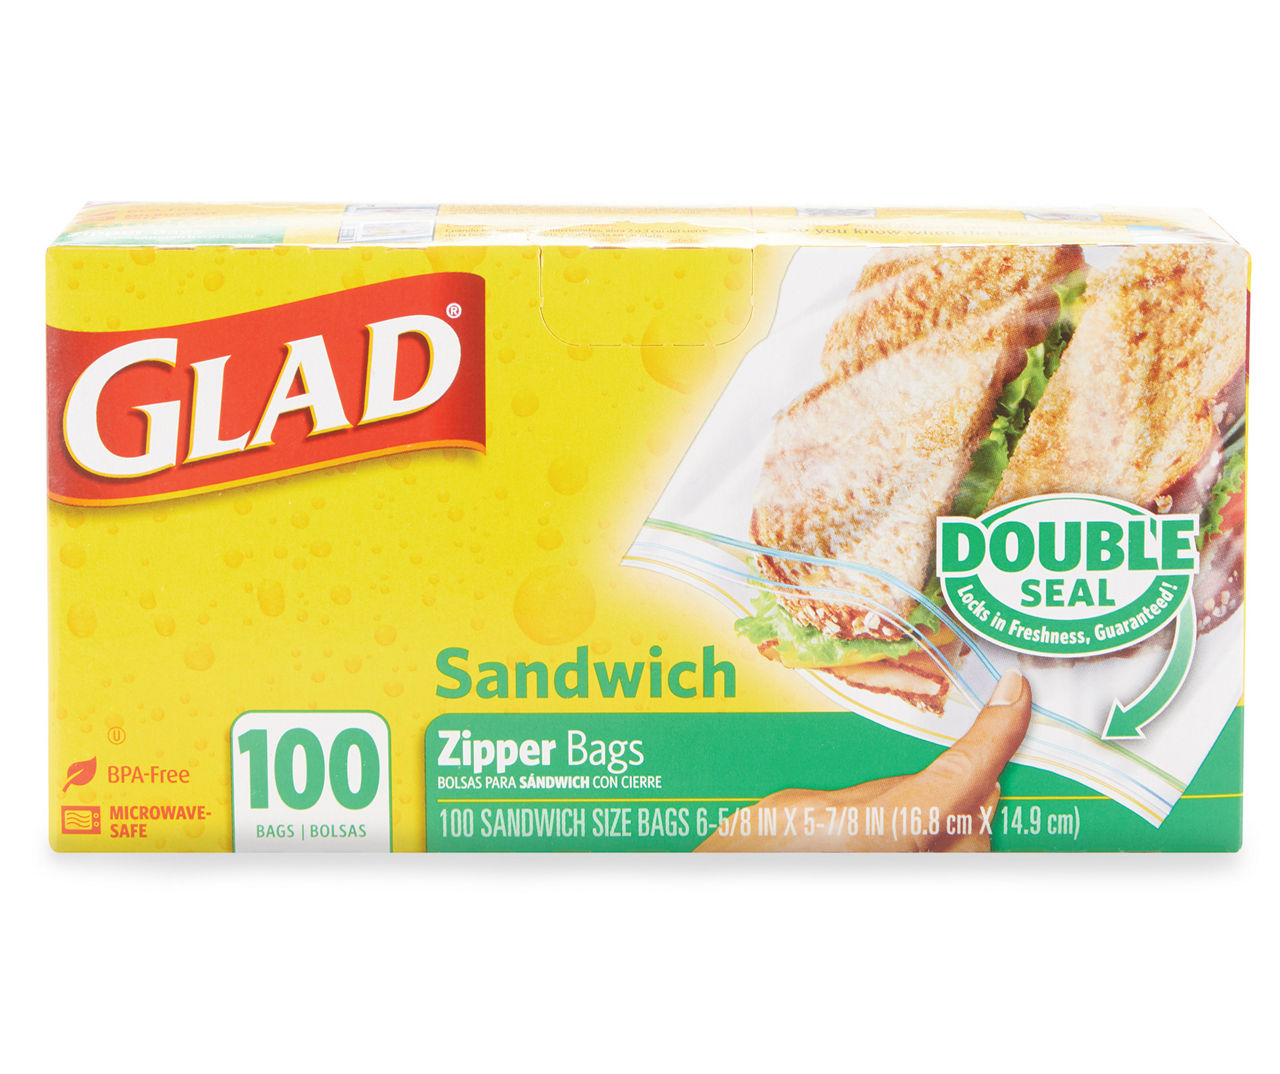 Glad Zipper Bags, Sandwich 100 Ea